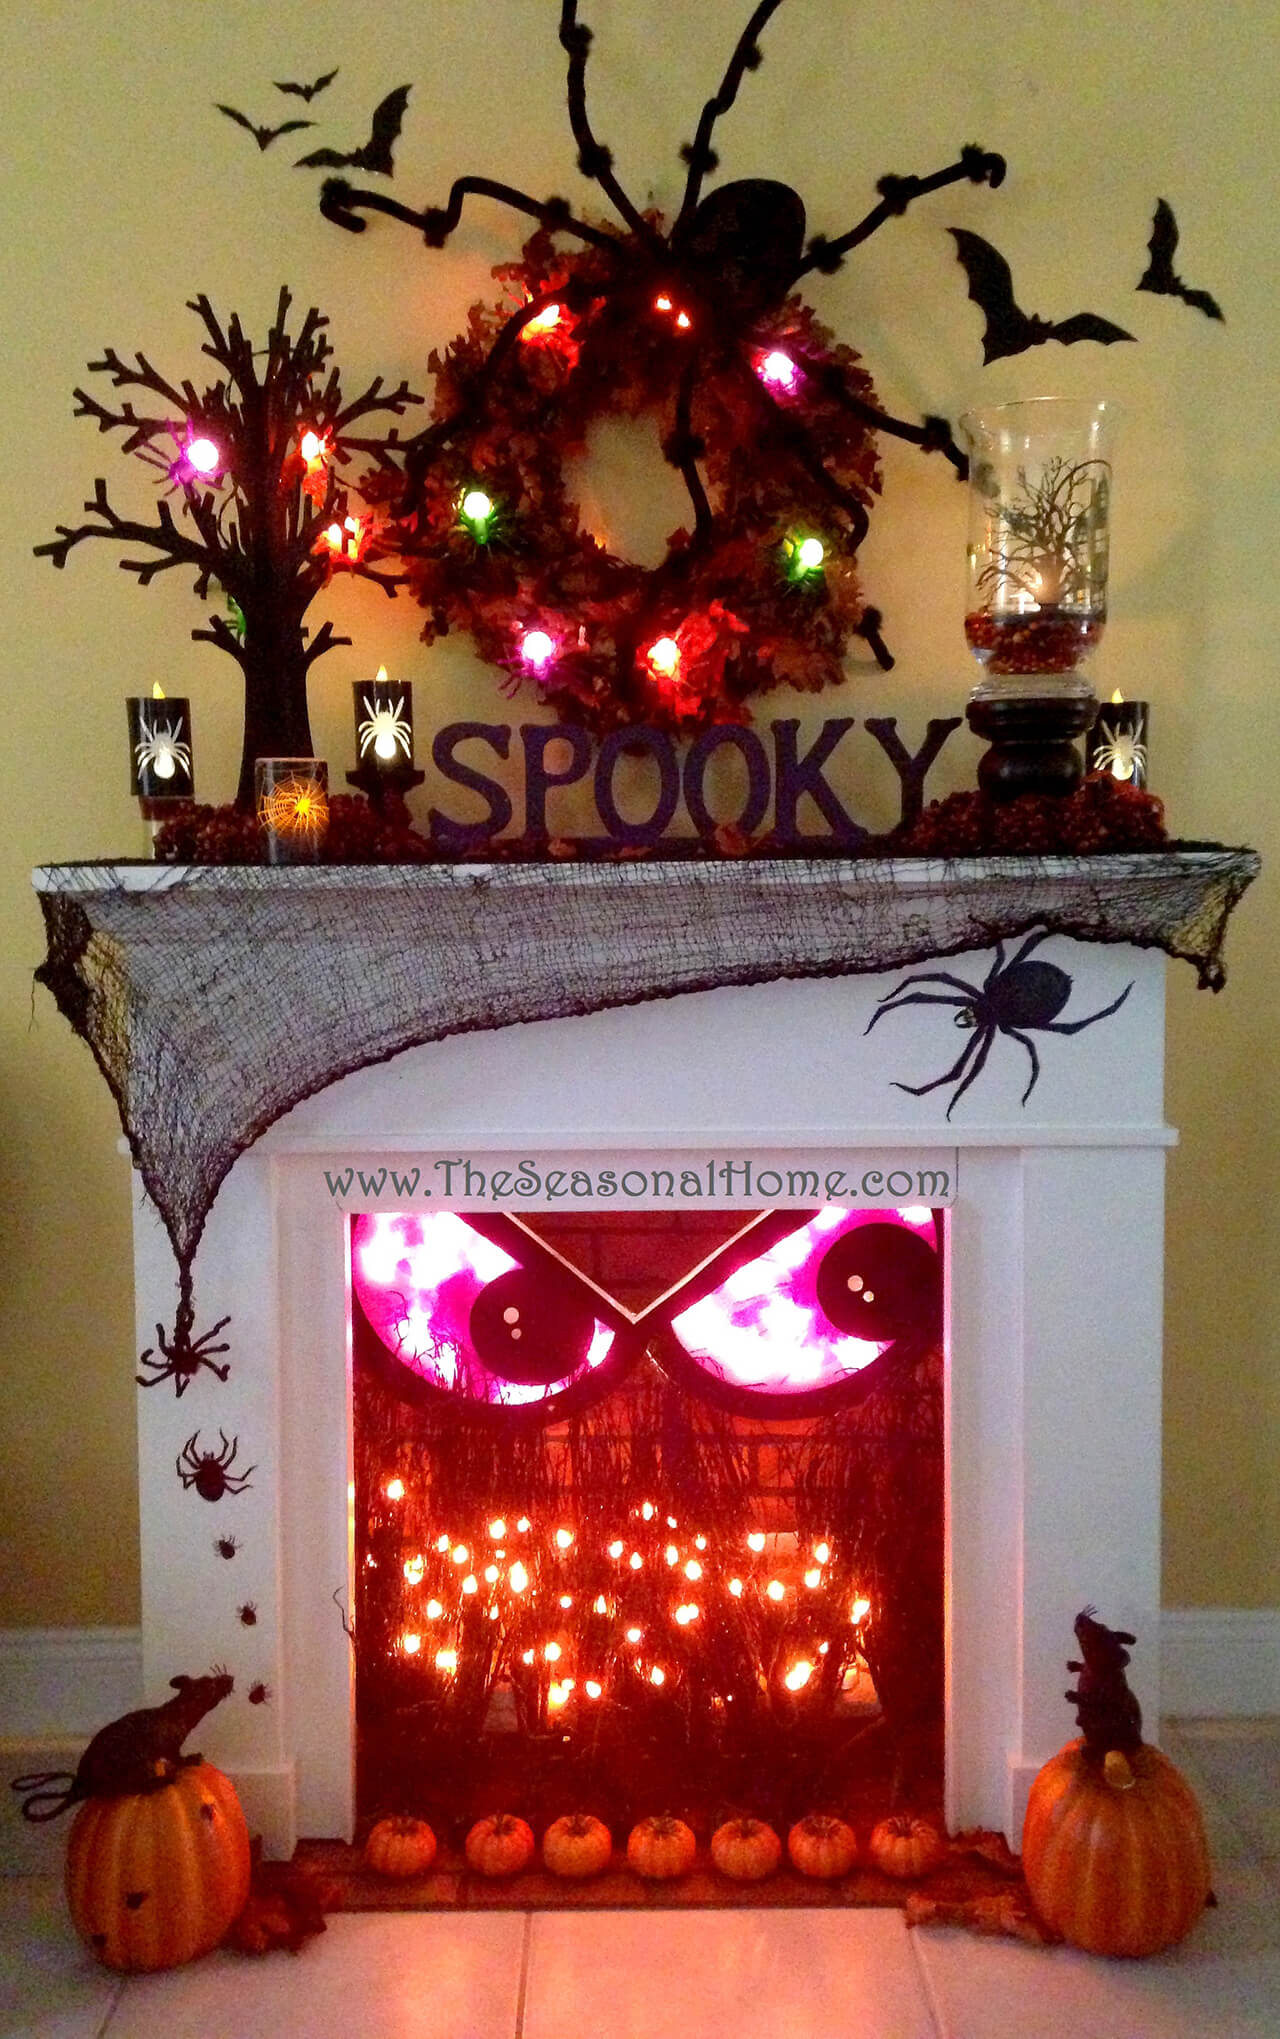 Spooky Fireplace Crackles with Fun | DIY Indoor Halloween Decorating Ideas